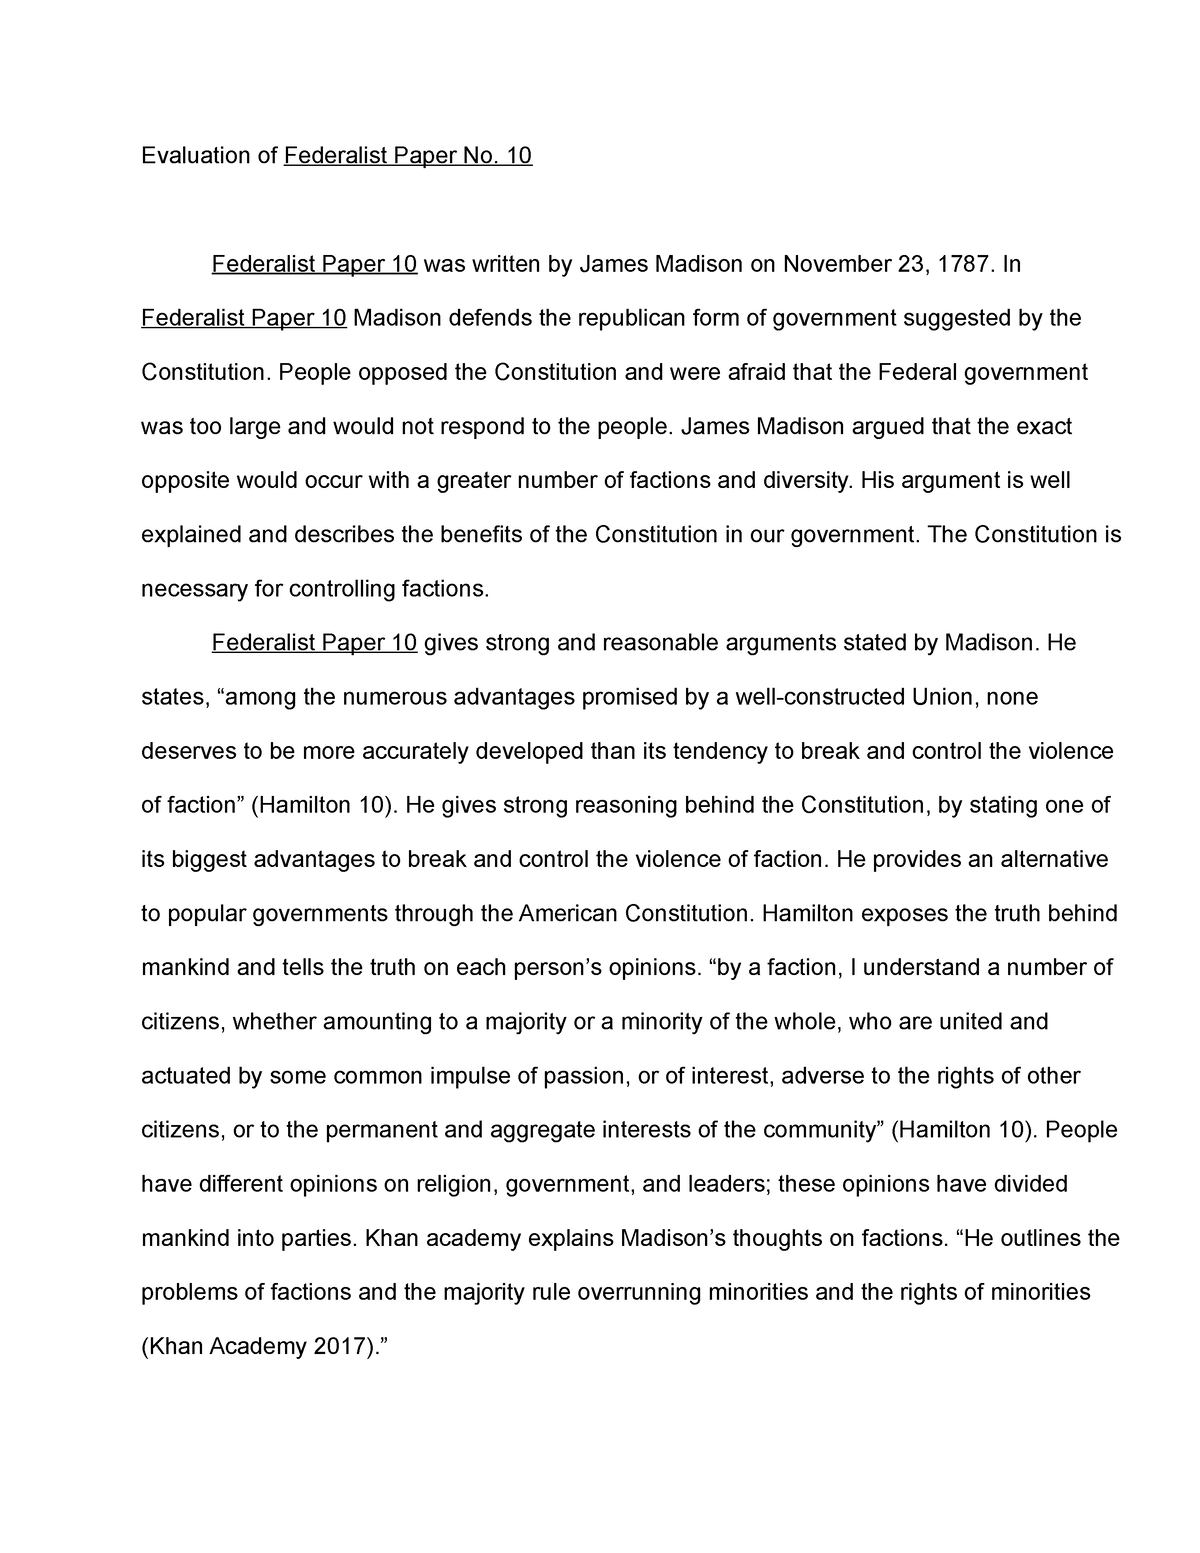 federalist paper 10 essay